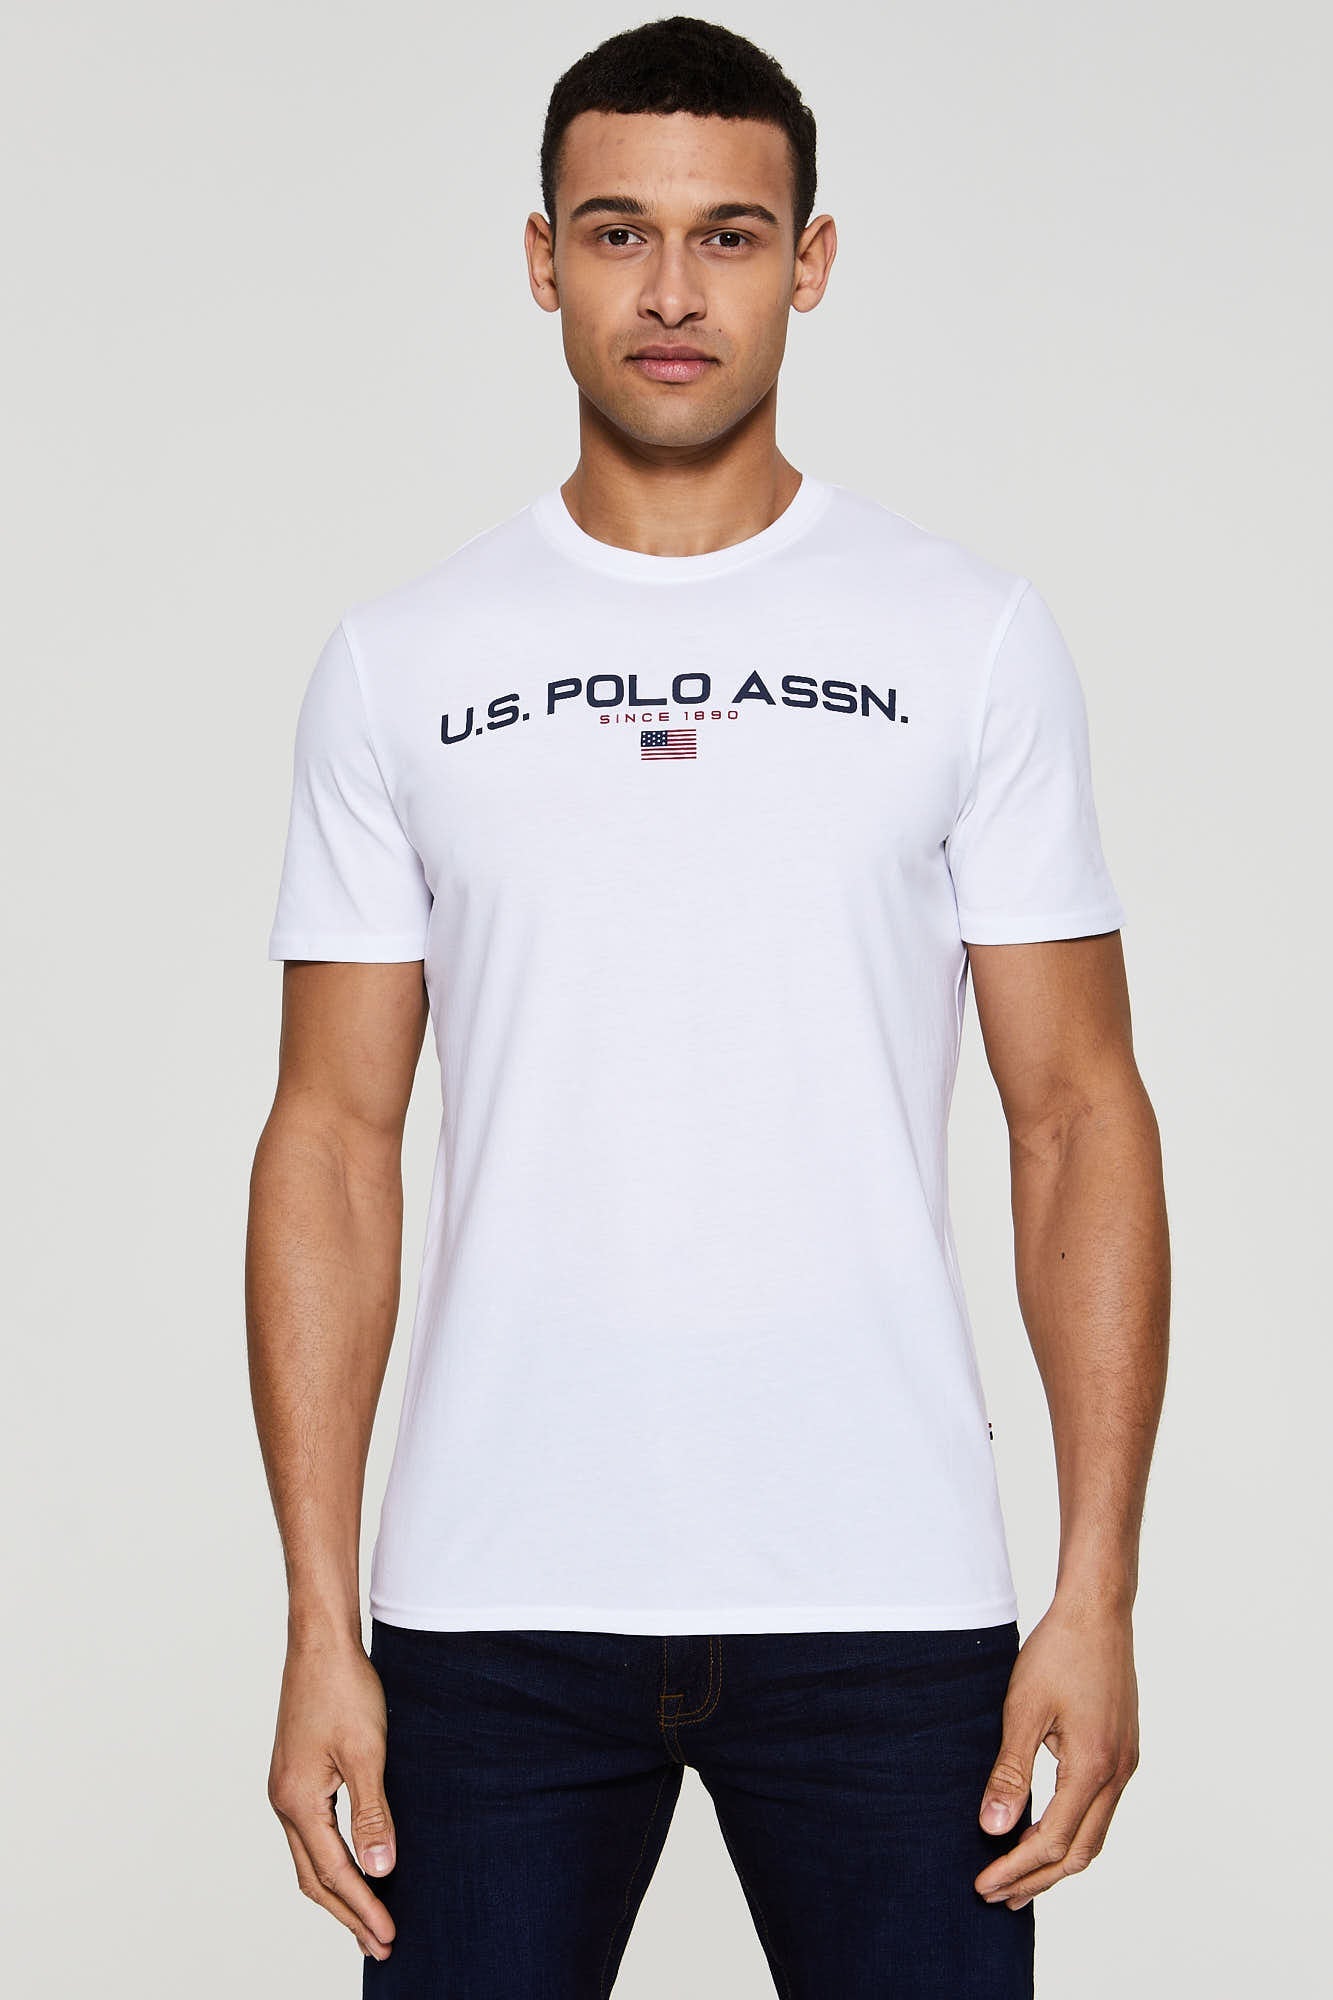 U.S. Polo Assn. Mens Block Flag Graphic T-Shirt in Bright White